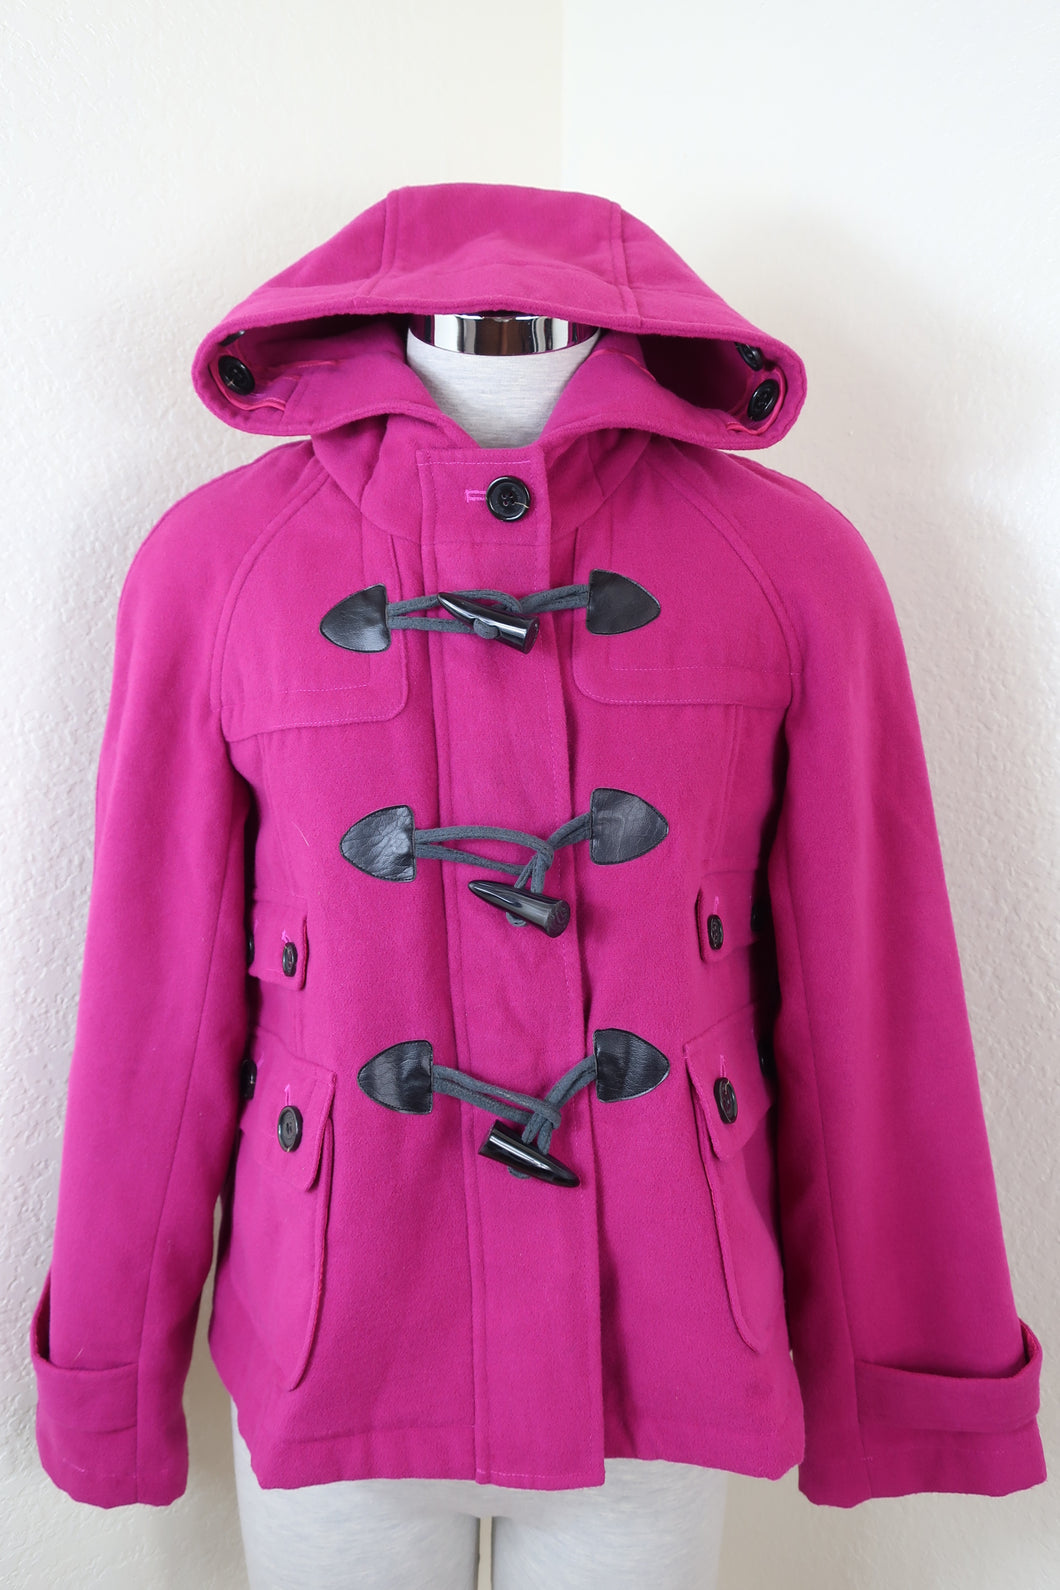 BURBERRY Fuchsia Pink Hoodie Toggle Wool Coat Jacket